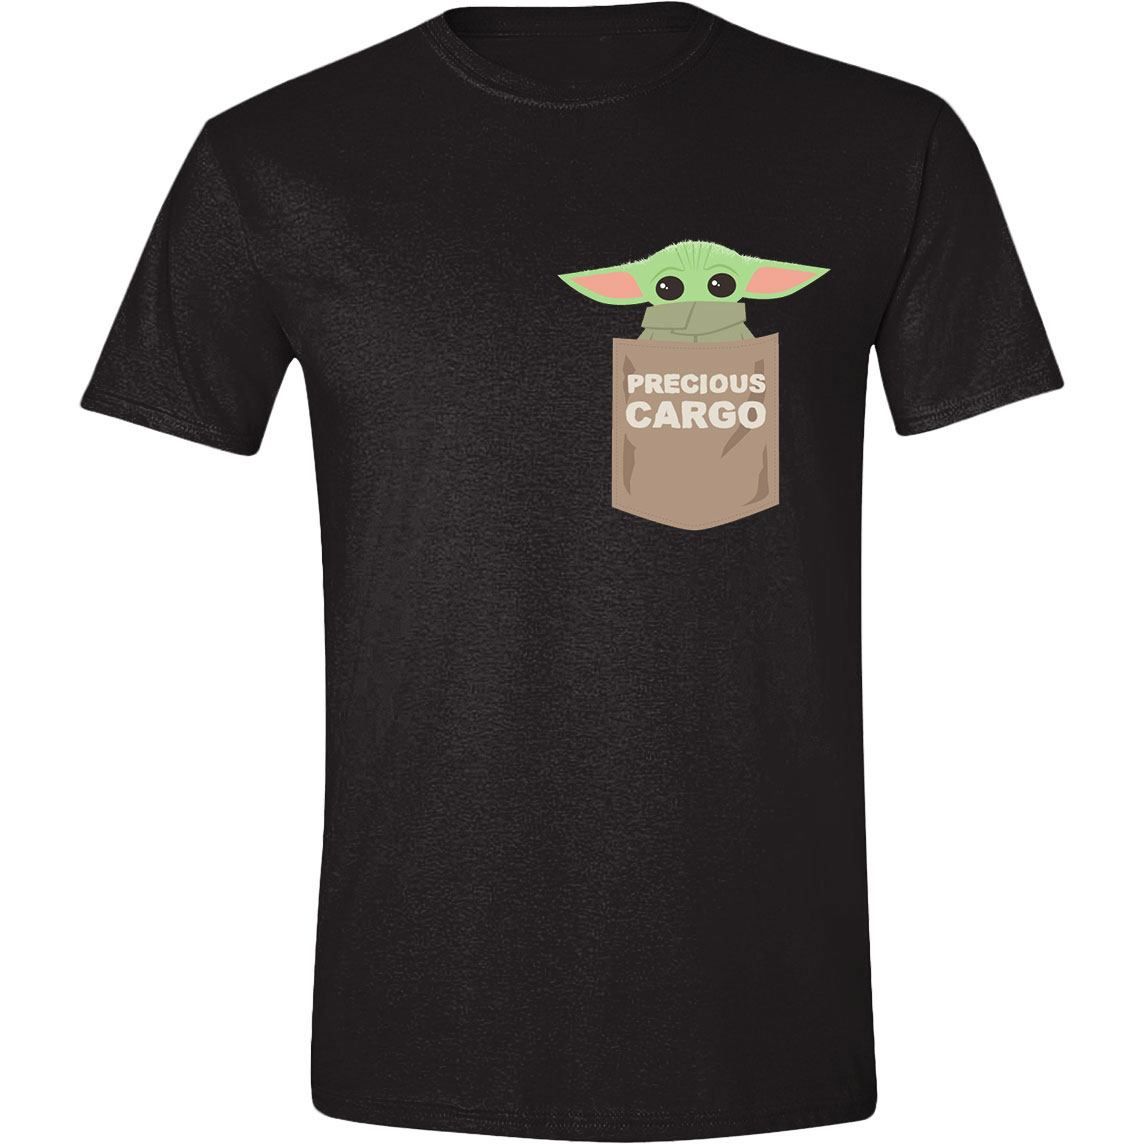 Star Wars The Mandalorian T-Shirt The Child Pocket Size S PCMerch